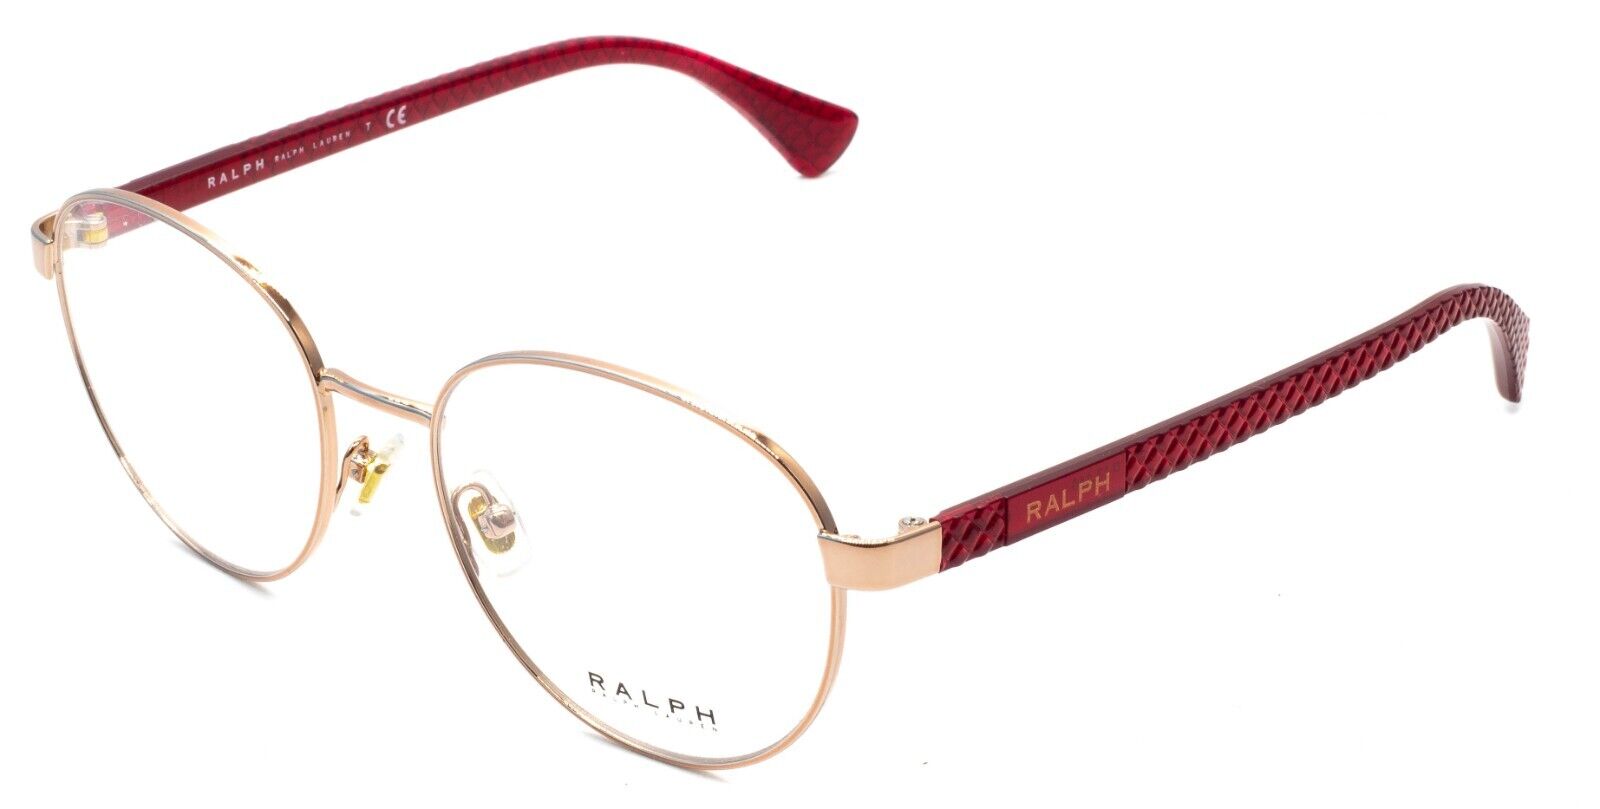 RALPH LAUREN RA 6050 9432 51mm Eyewear FRAMES RX Optical Eyeglasses Glasses  New - GGV Eyewear